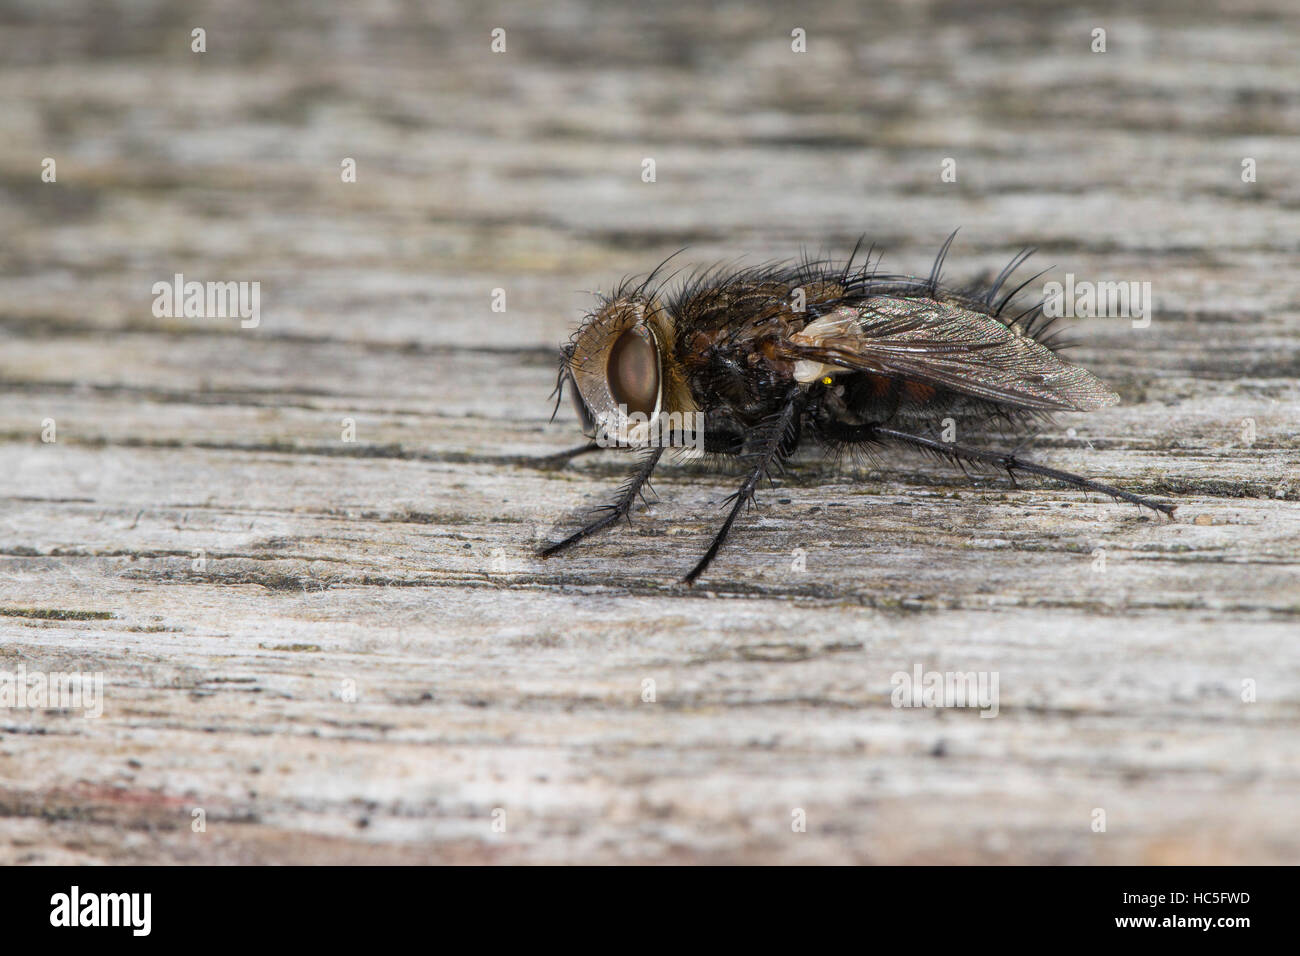 Raupenfliege, Männchen, Gonia picea, Tachinid Fly, male, Tachina fly, Tachinidae, Raupenfliegen, Igelfliegen, Schmarotzerfliegen, tachinids, parasitic Stock Photo